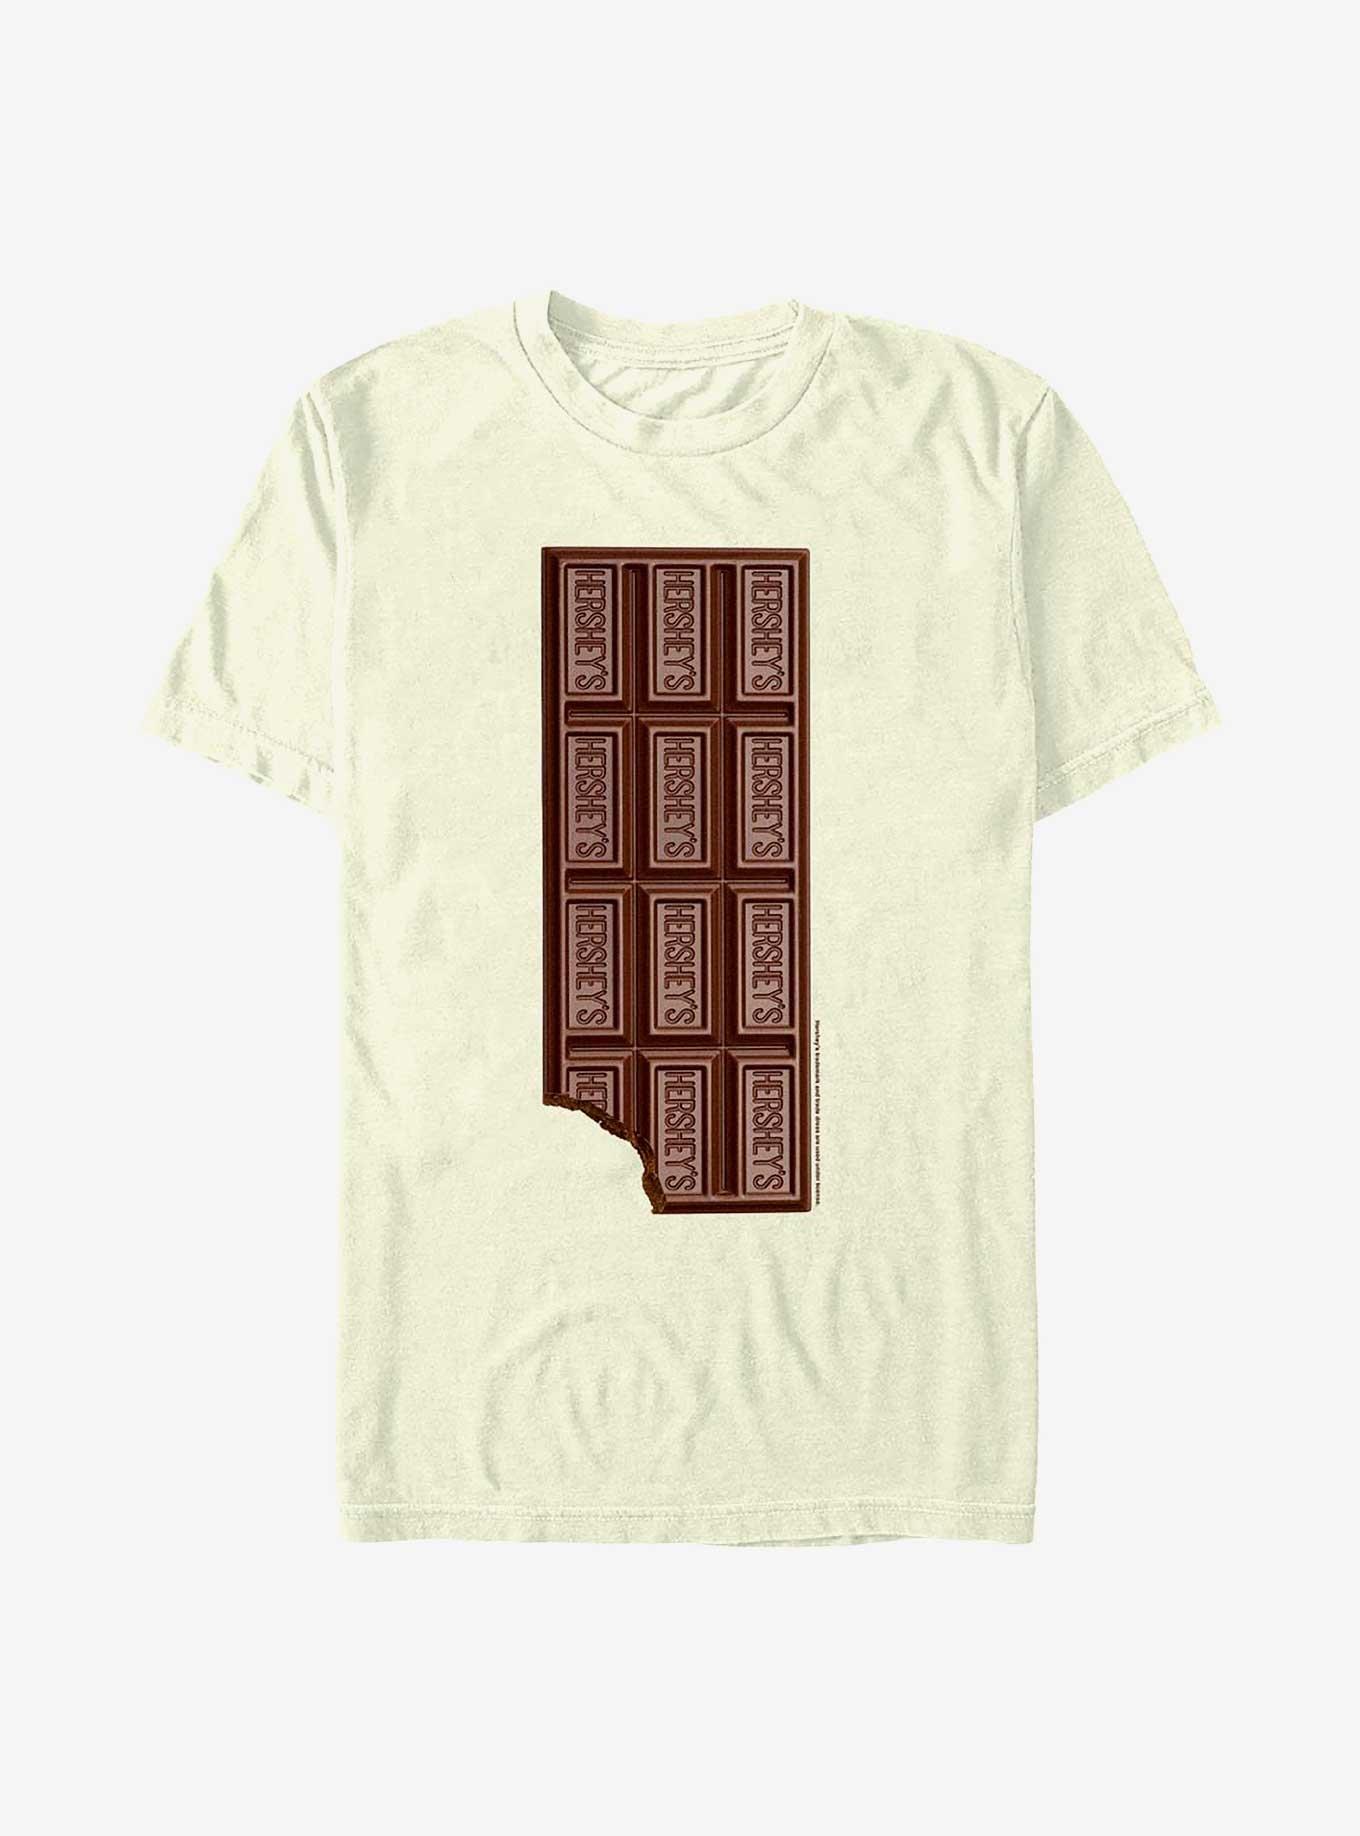 Hershey's Chocolate Bar Bite T-Shirt, NATURAL, hi-res